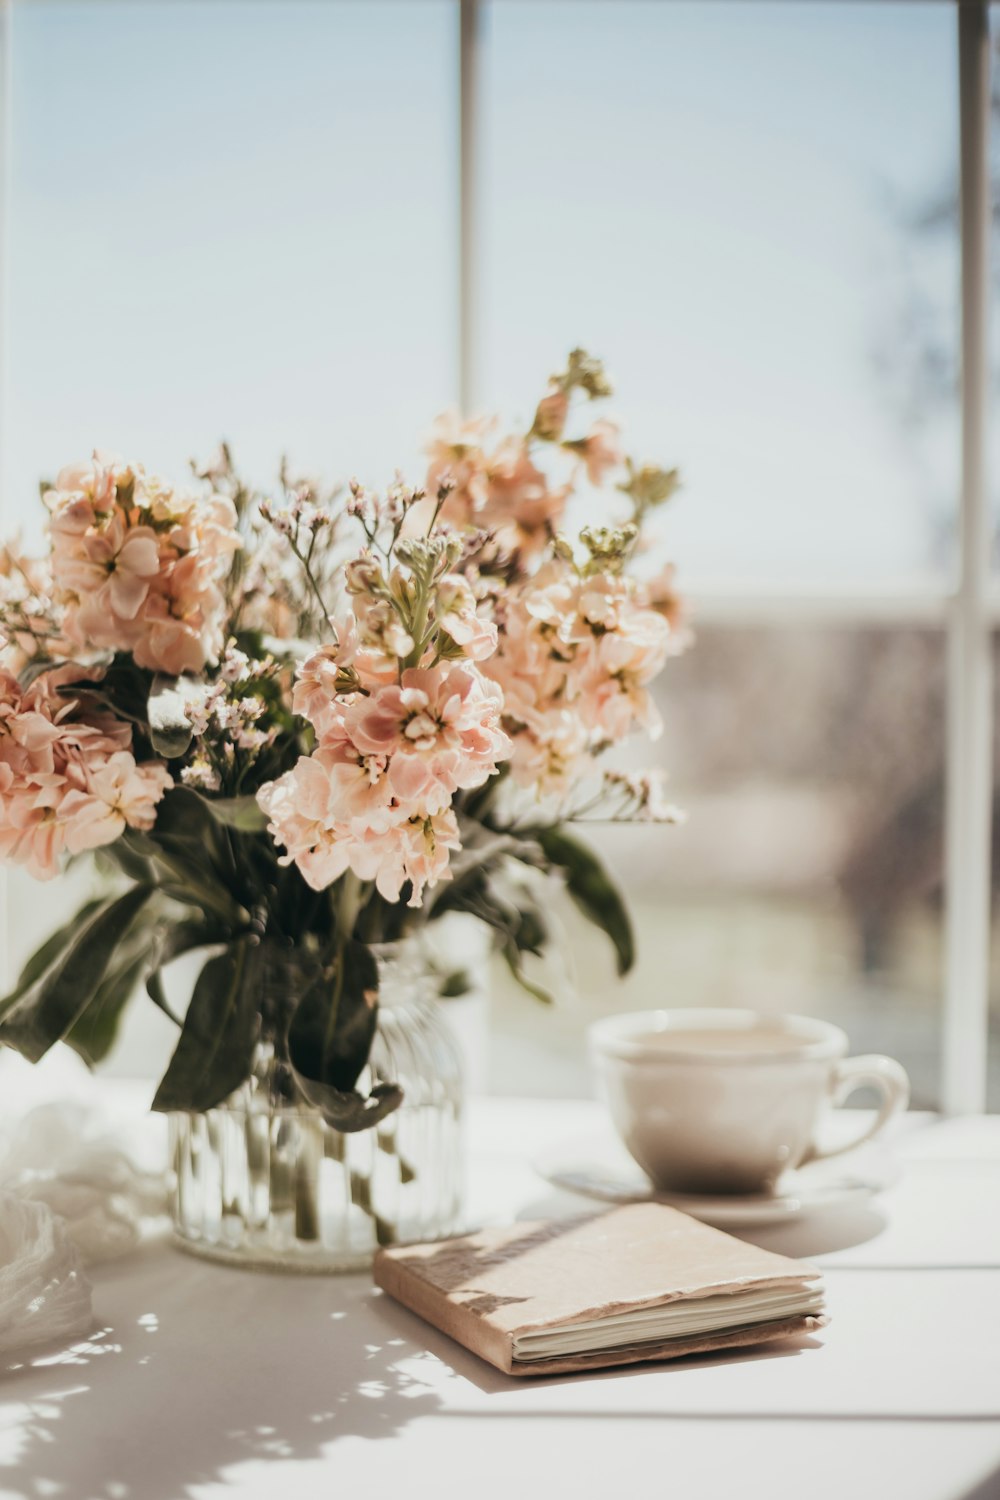 fiori bianchi e rosa su tazza da tè in ceramica bianca su tavolo bianco